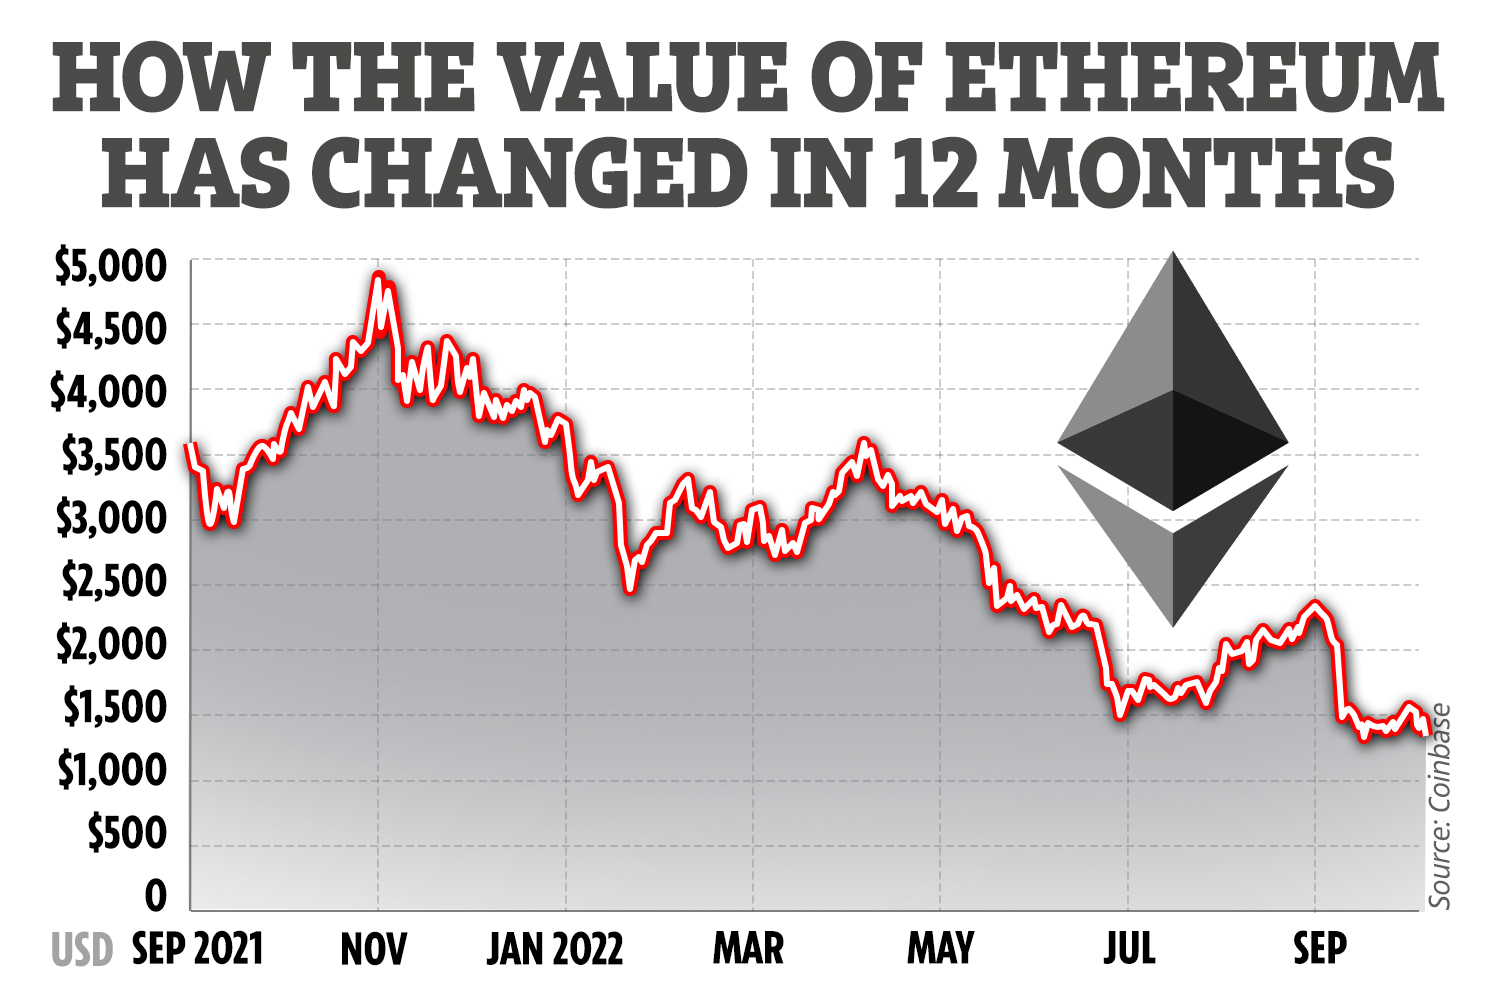 Ethereum USD (ETH-USD) Price, Value, News & History - Yahoo Finance